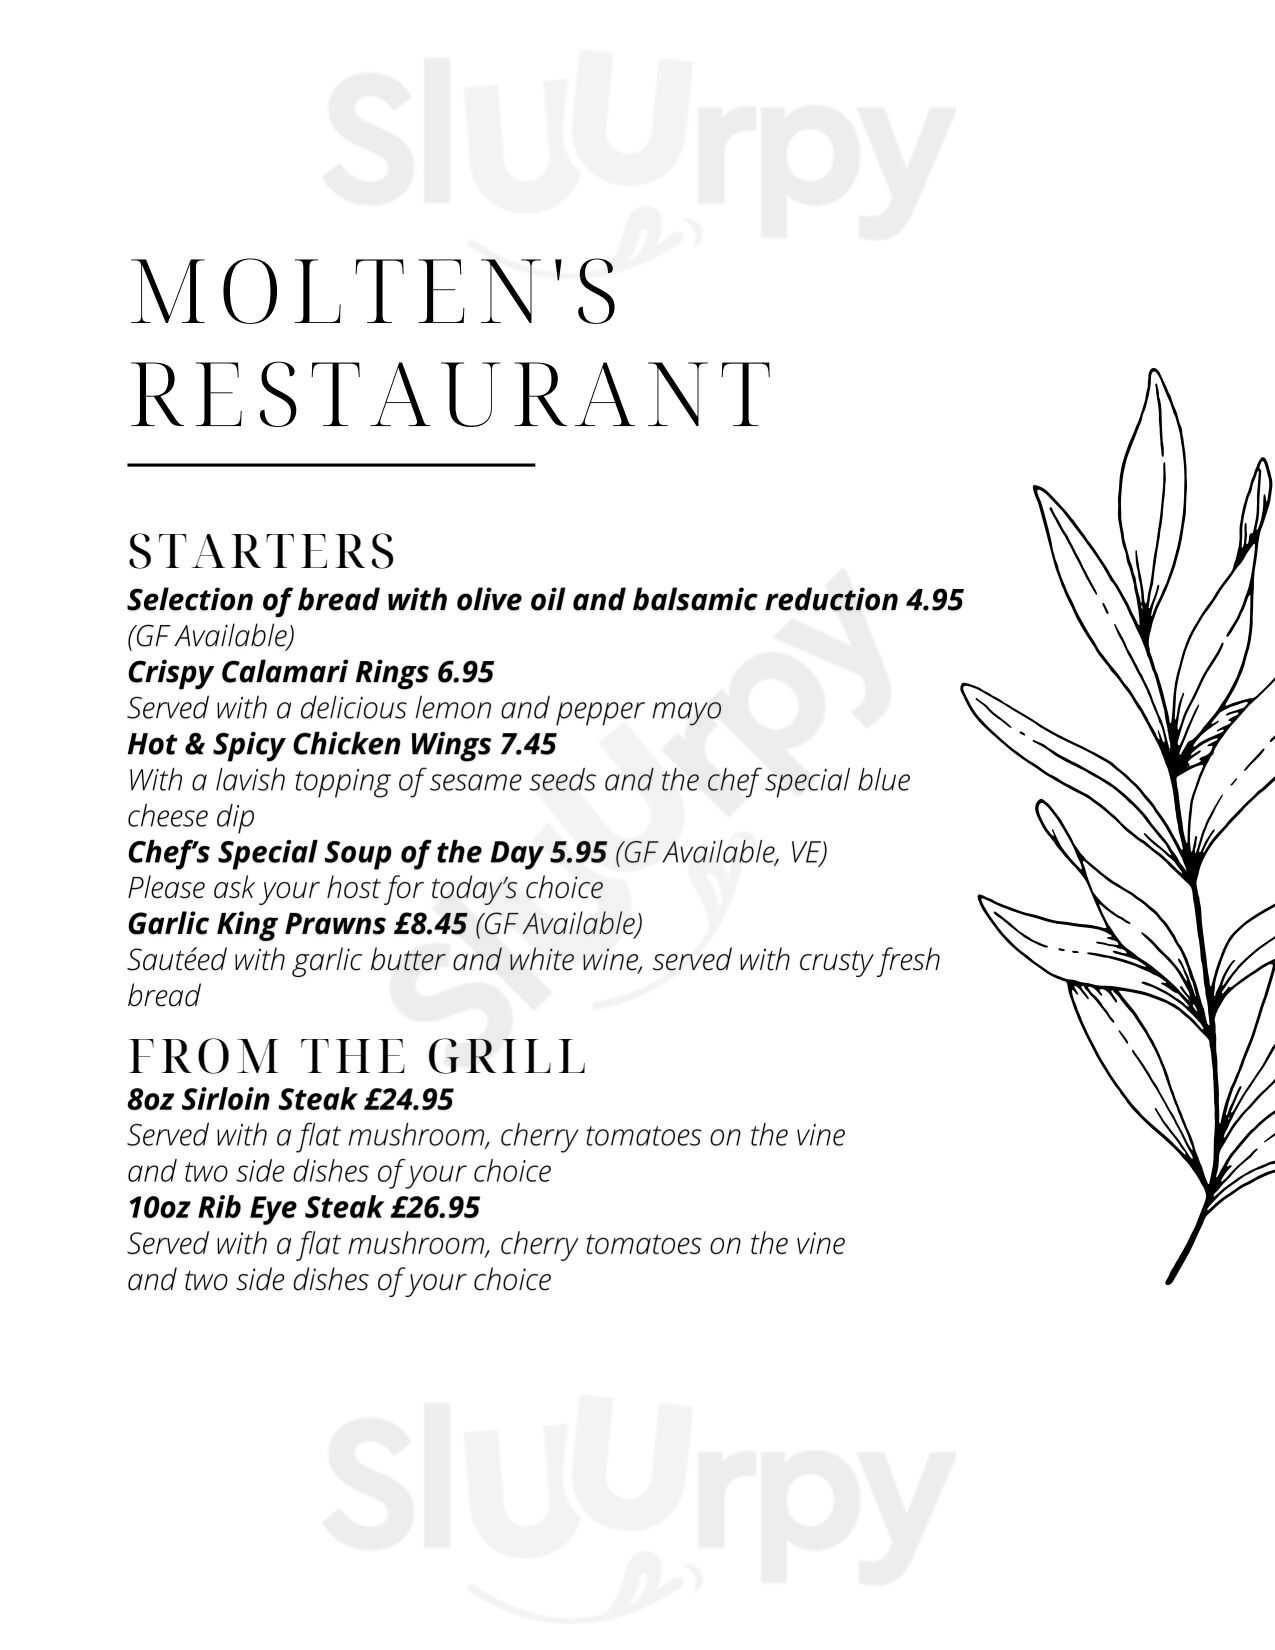 Moltens Restaurant Milton Keynes Menu - 1